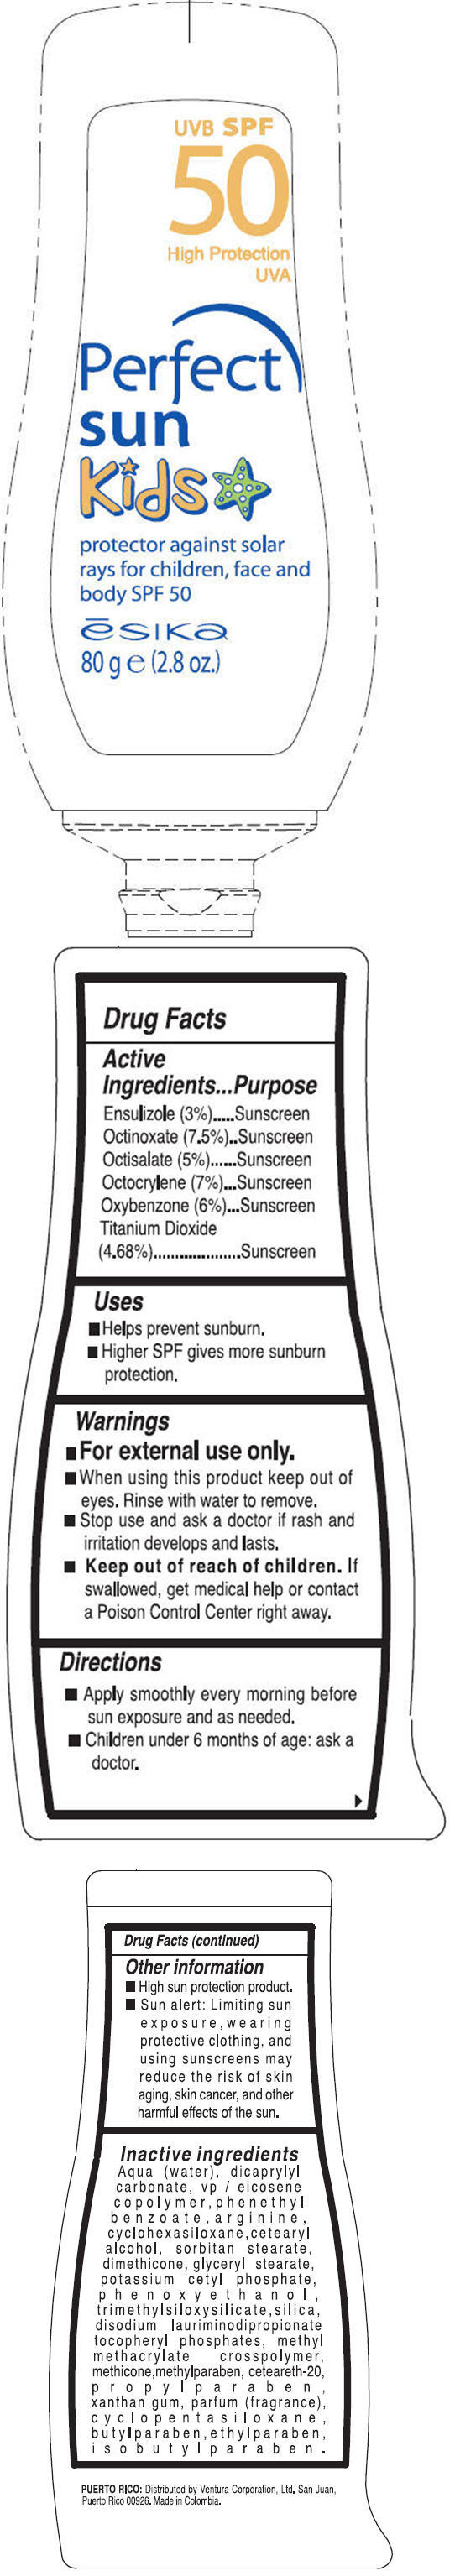 PRINCIPAL DISPLAY PANEL - 82 g Bottle Label